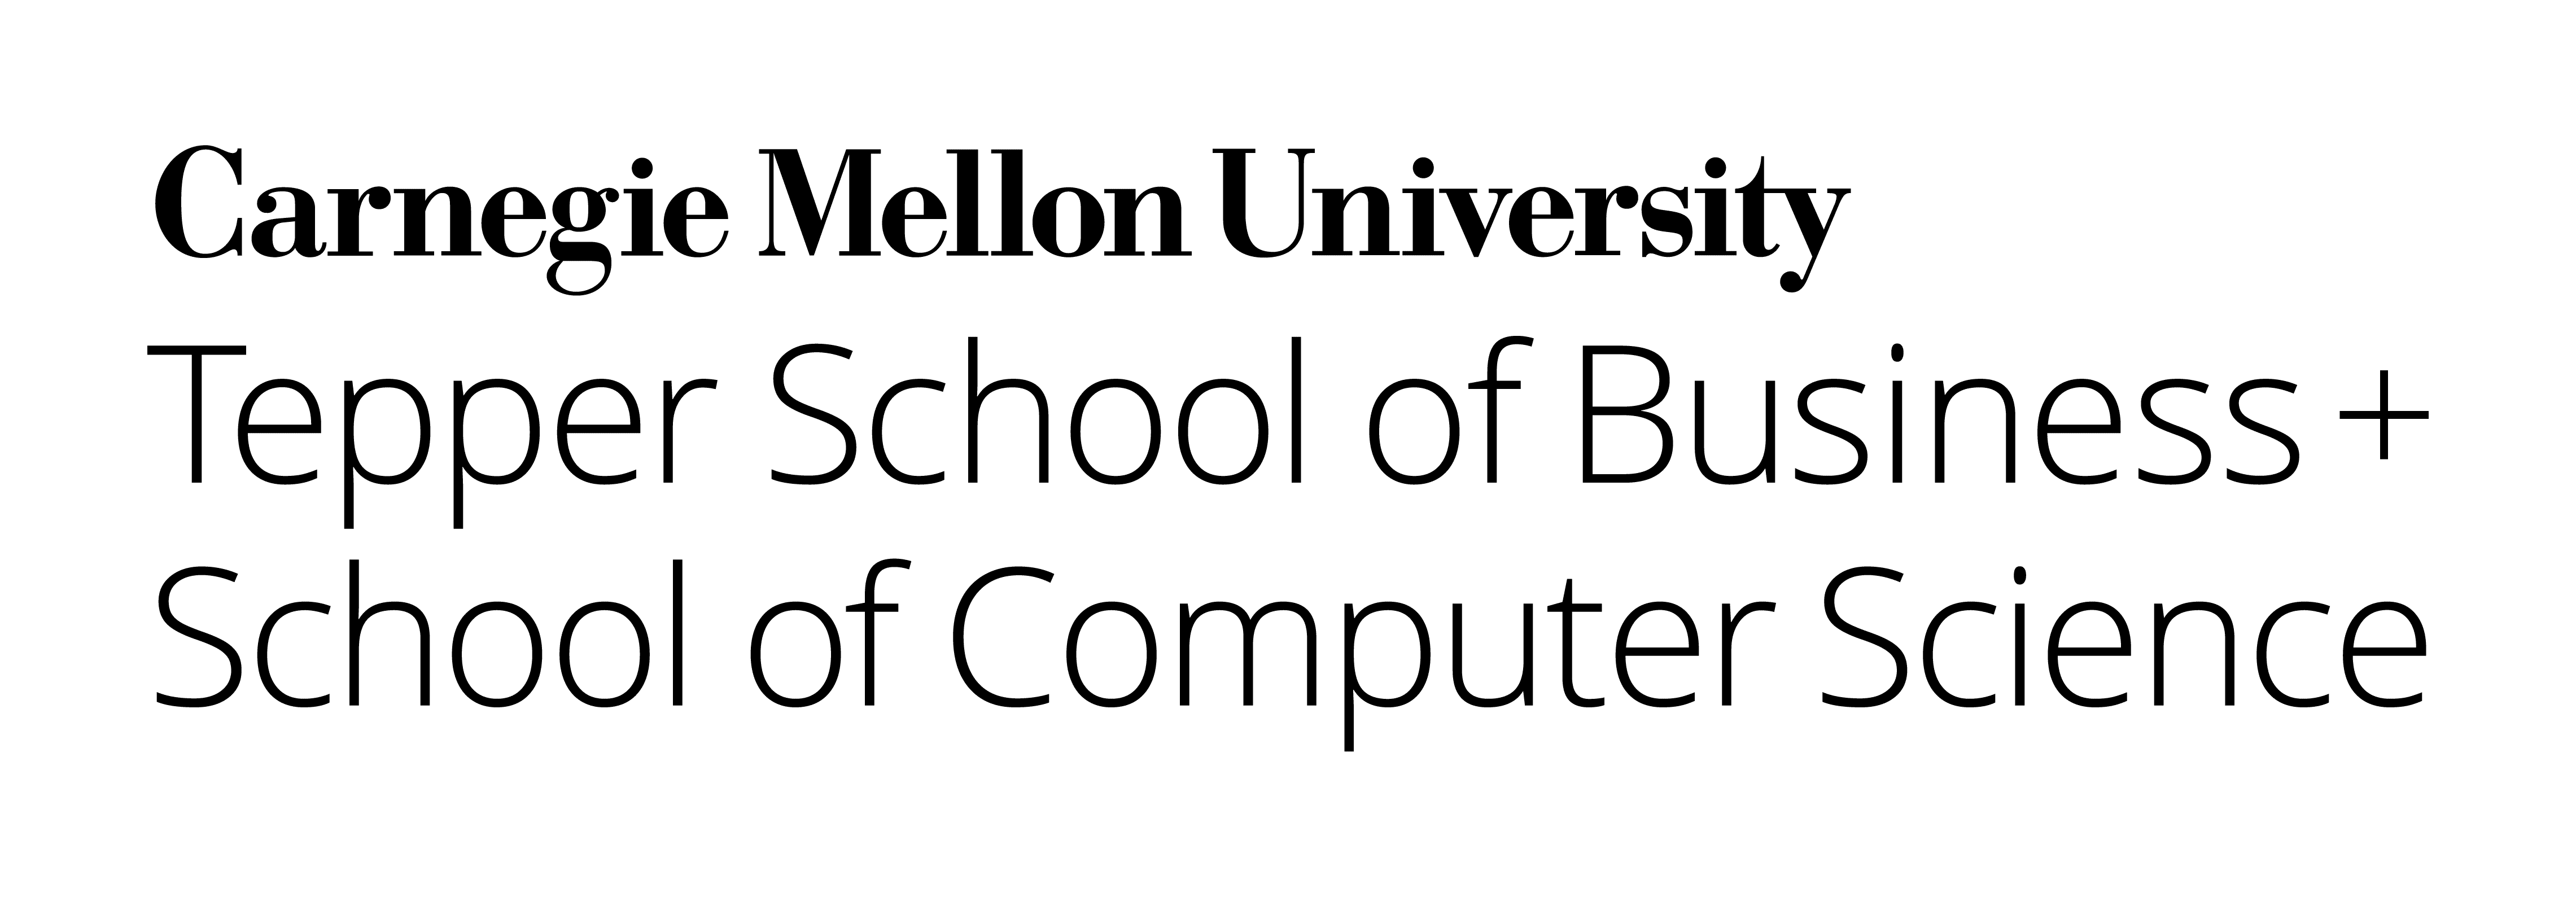 Carnegie Mellon University Tepper School of Business + School of Computer Science logo in black text 